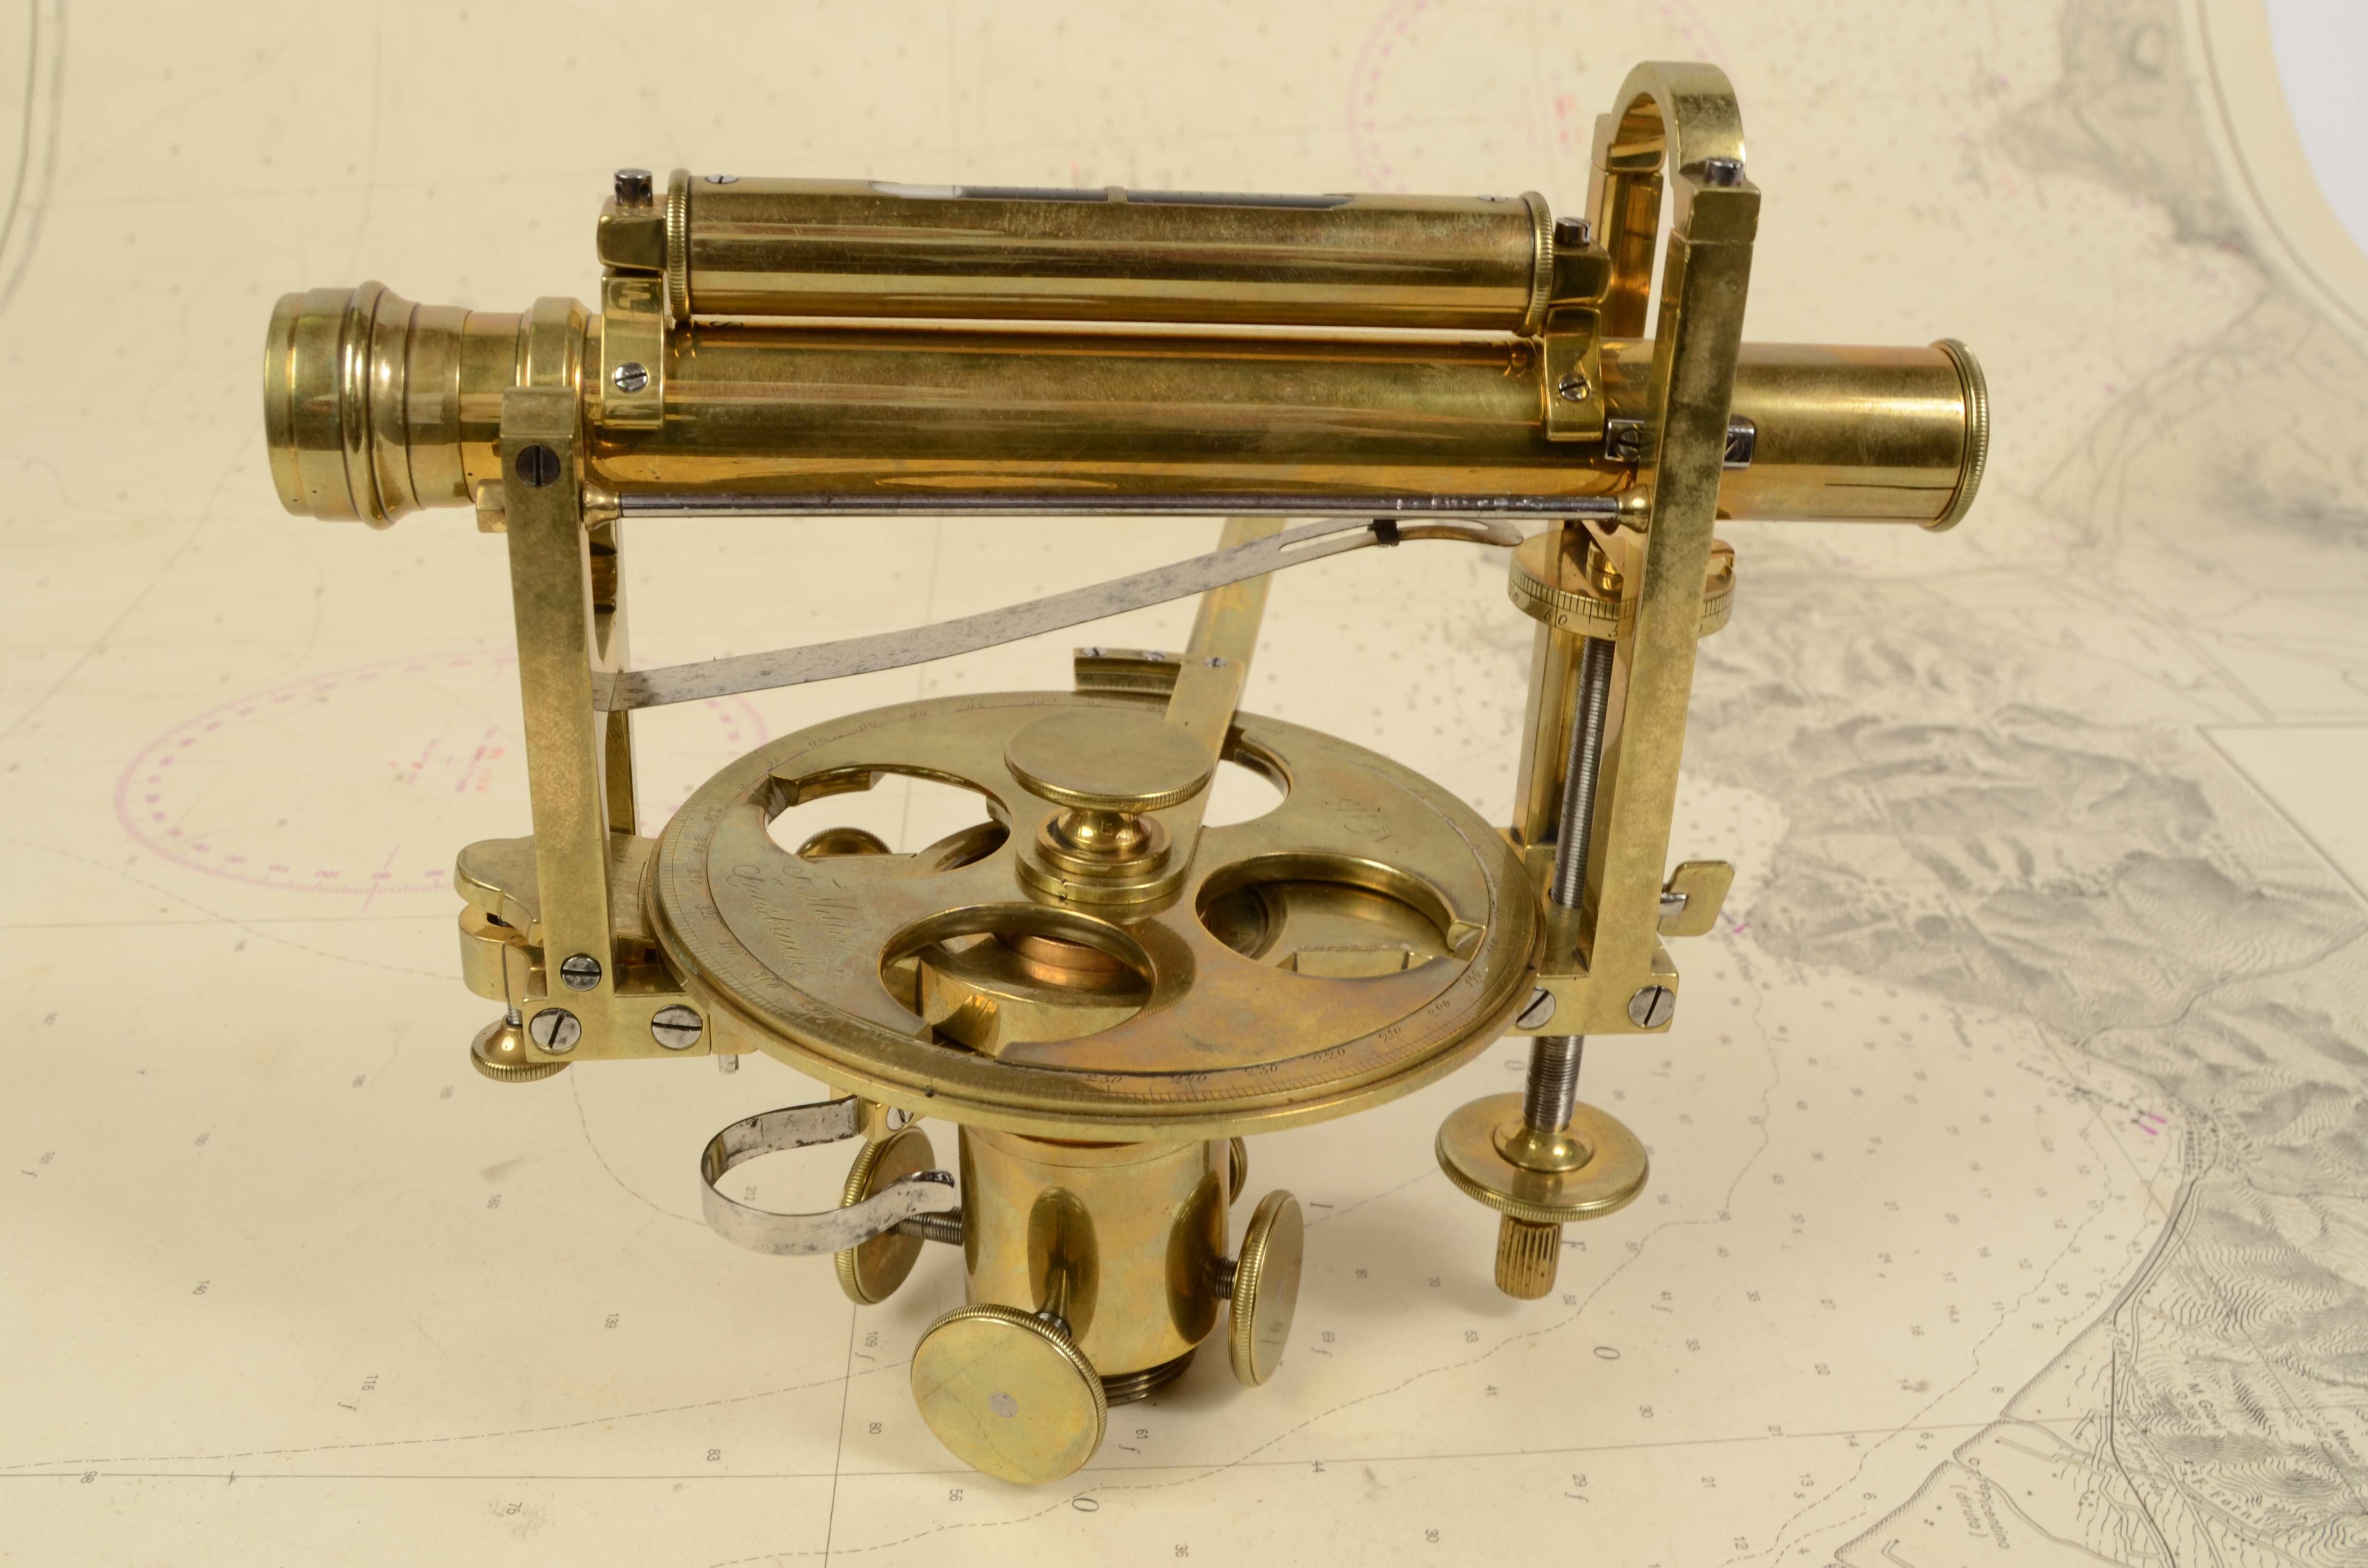 1870s Brass Clisigonimeter F. Miller Innsbruck Surveyor Measurement Instrumemt 1